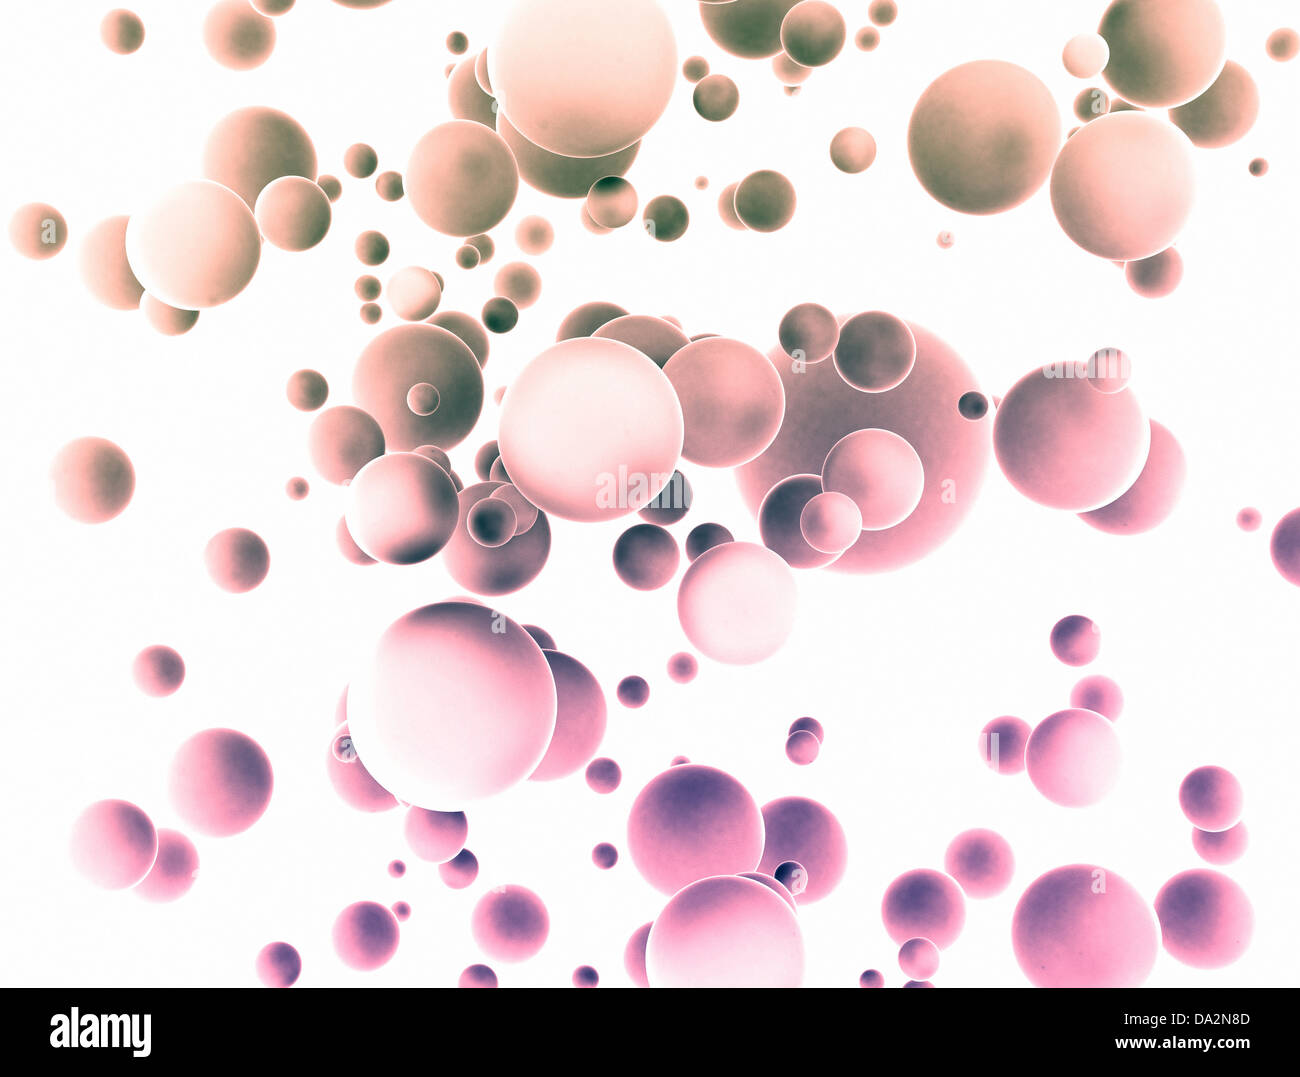 Abstract sfere flottanti. La scienza abstract background. Foto Stock